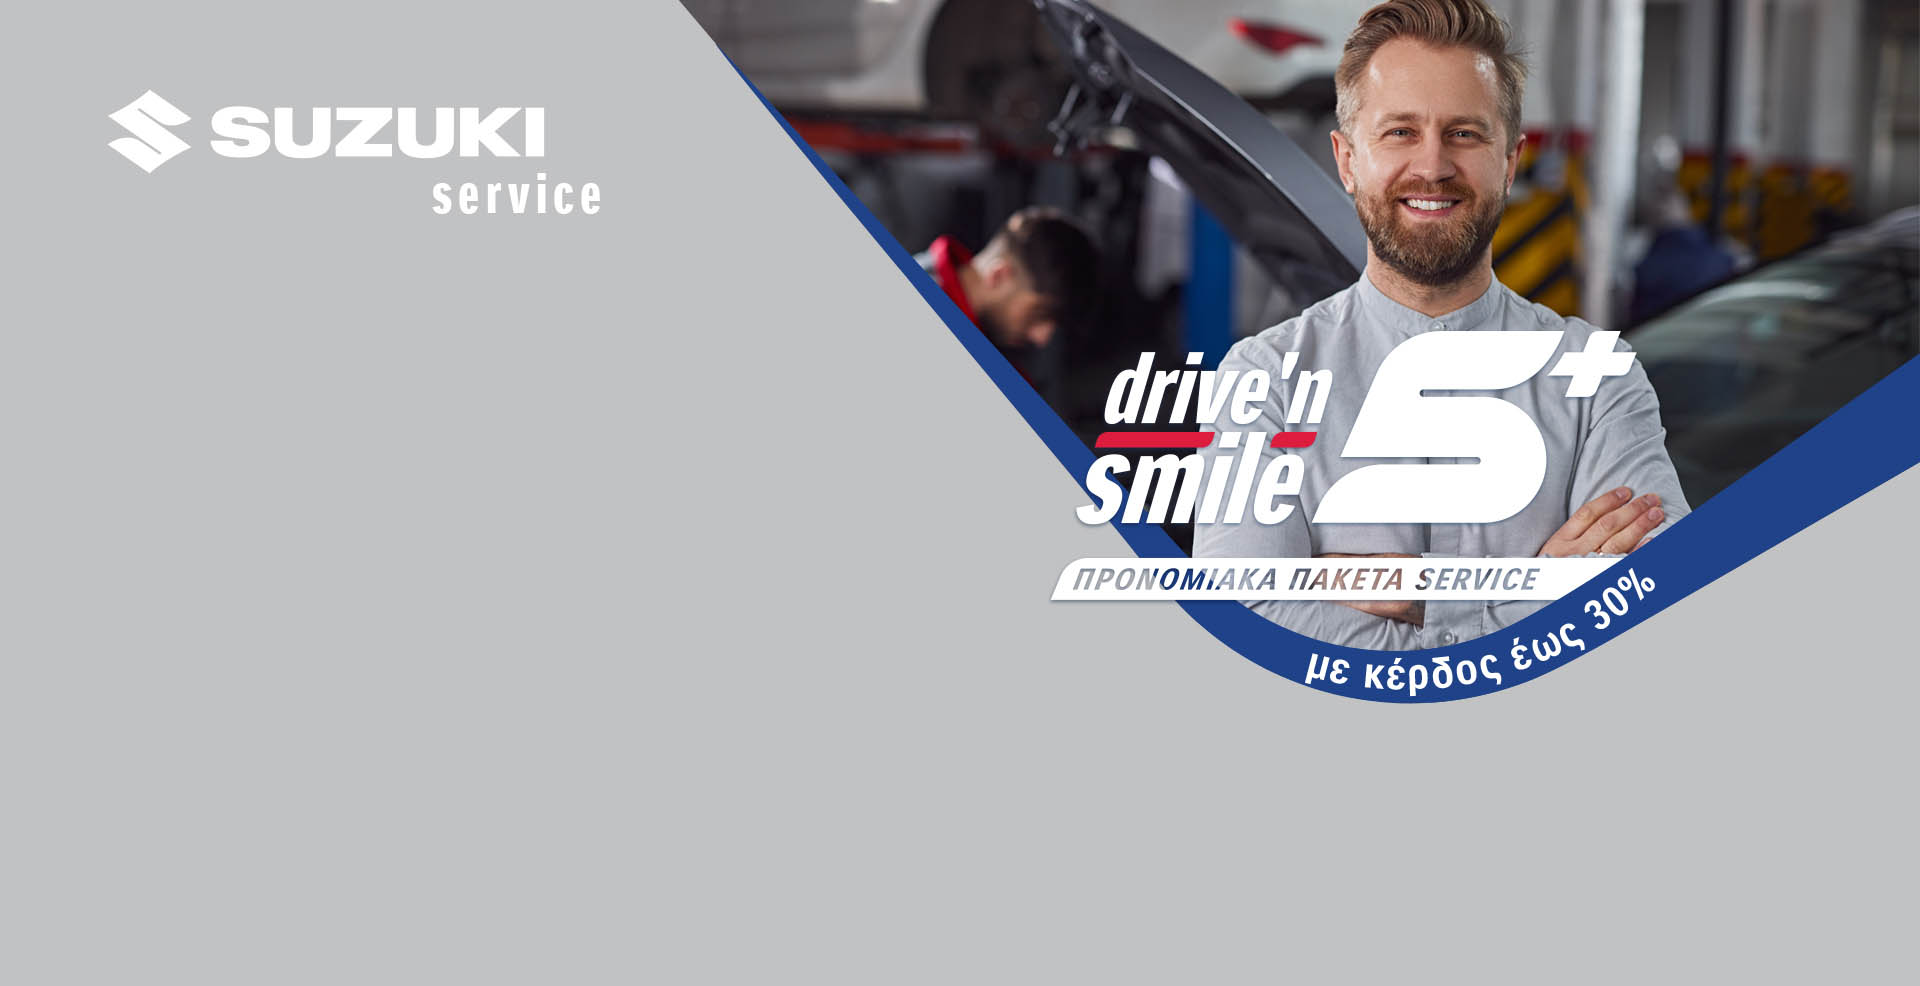 Suzuki Service Drive 'n smile